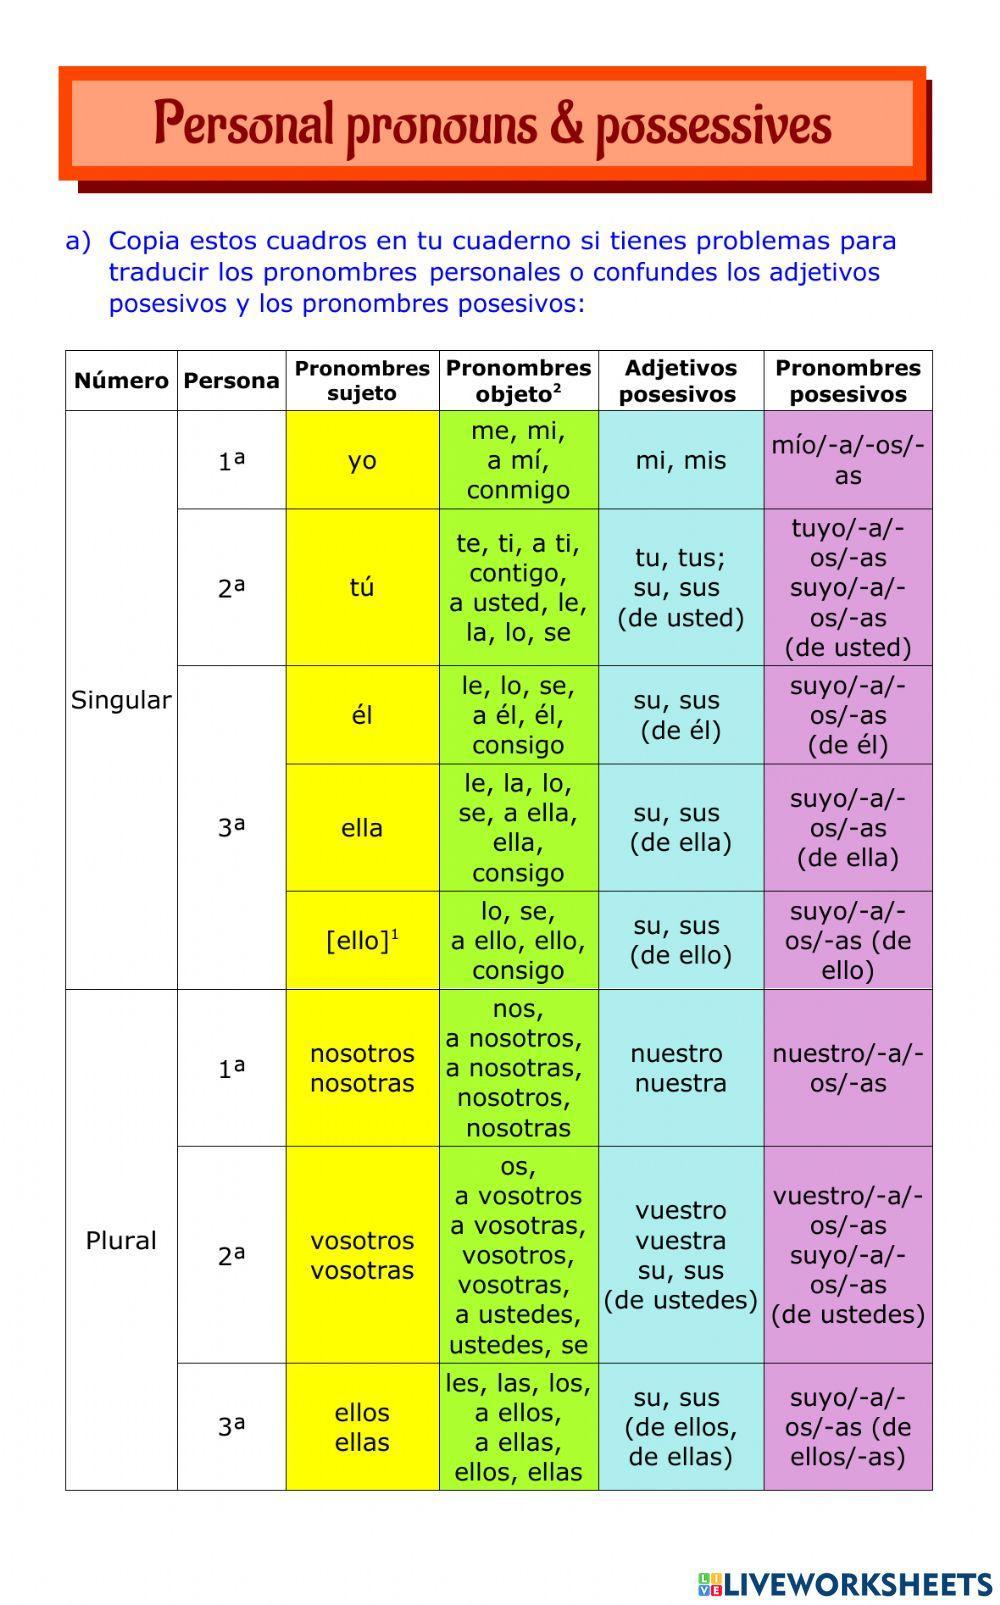 Personal pronouns and possessives